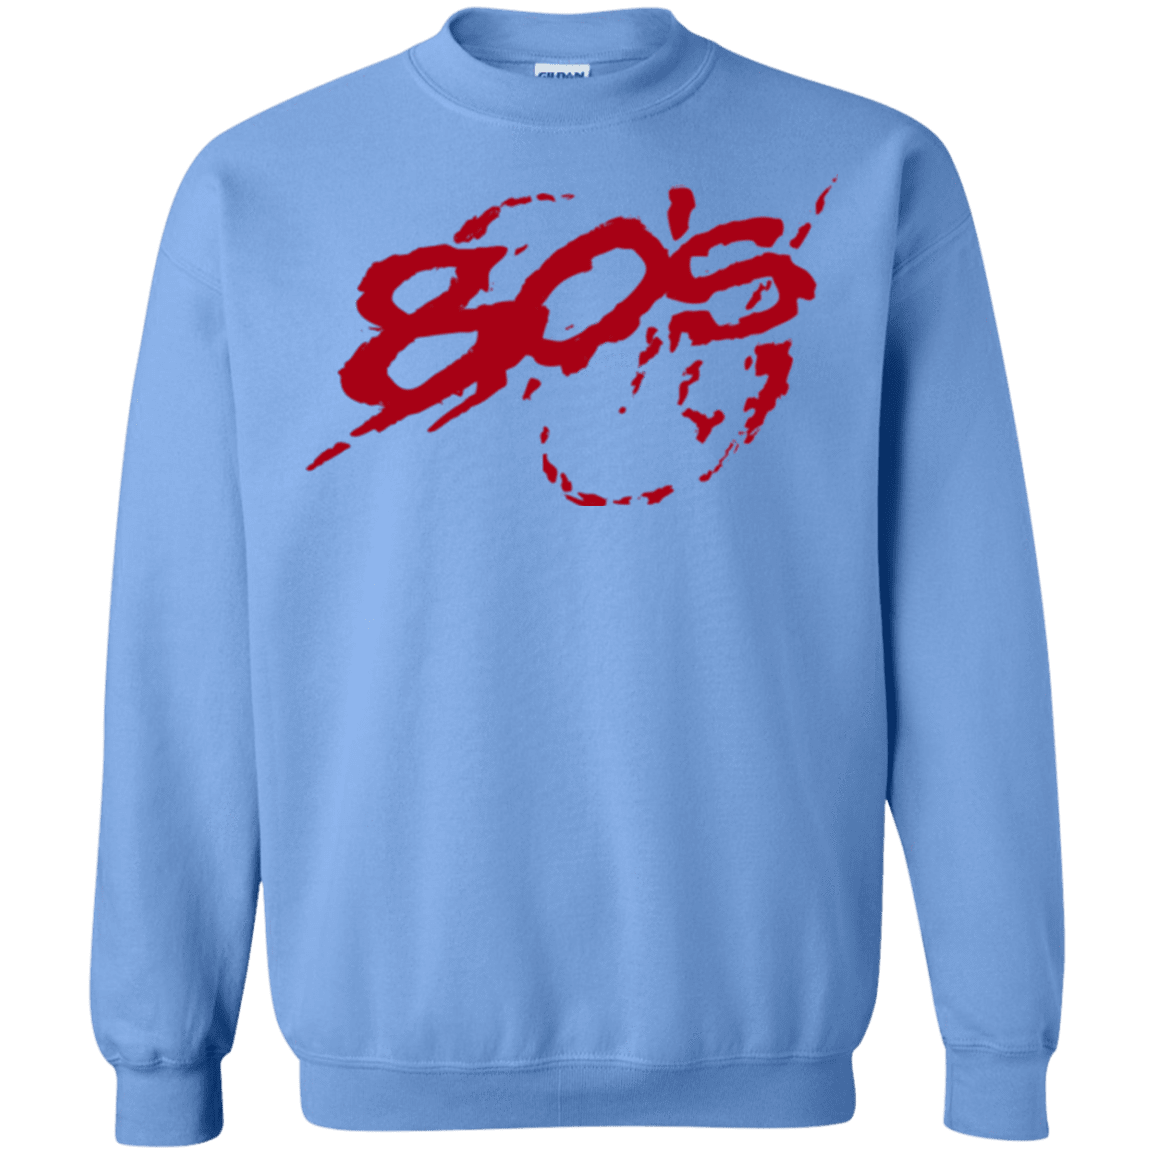 Sweatshirts Carolina Blue / Small 80s 300 Crewneck Sweatshirt